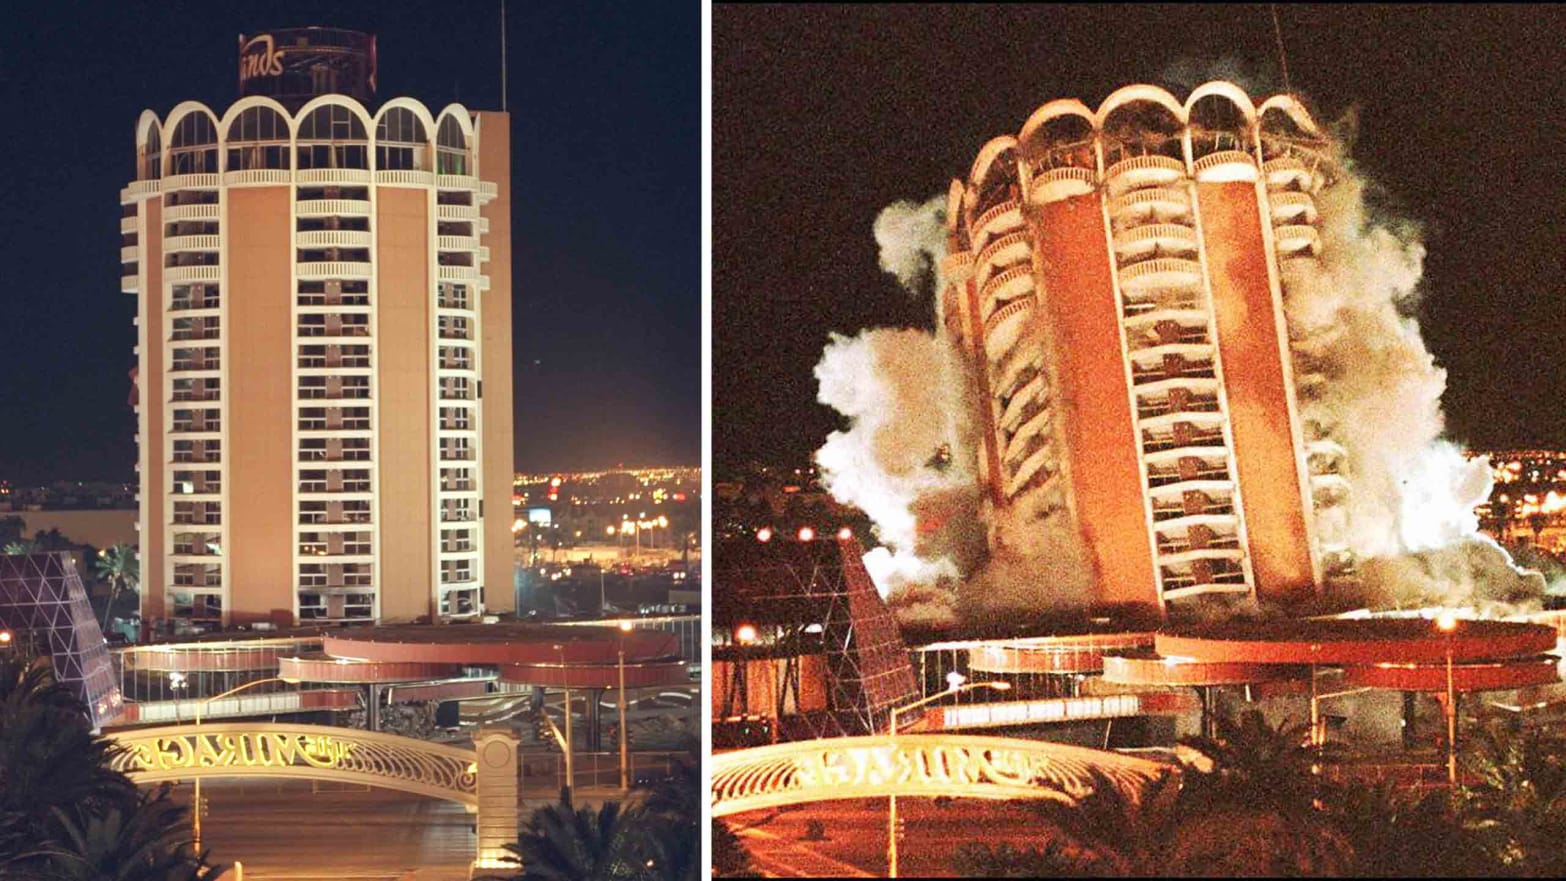 Las Vegas - History, The Mafia & Casinos